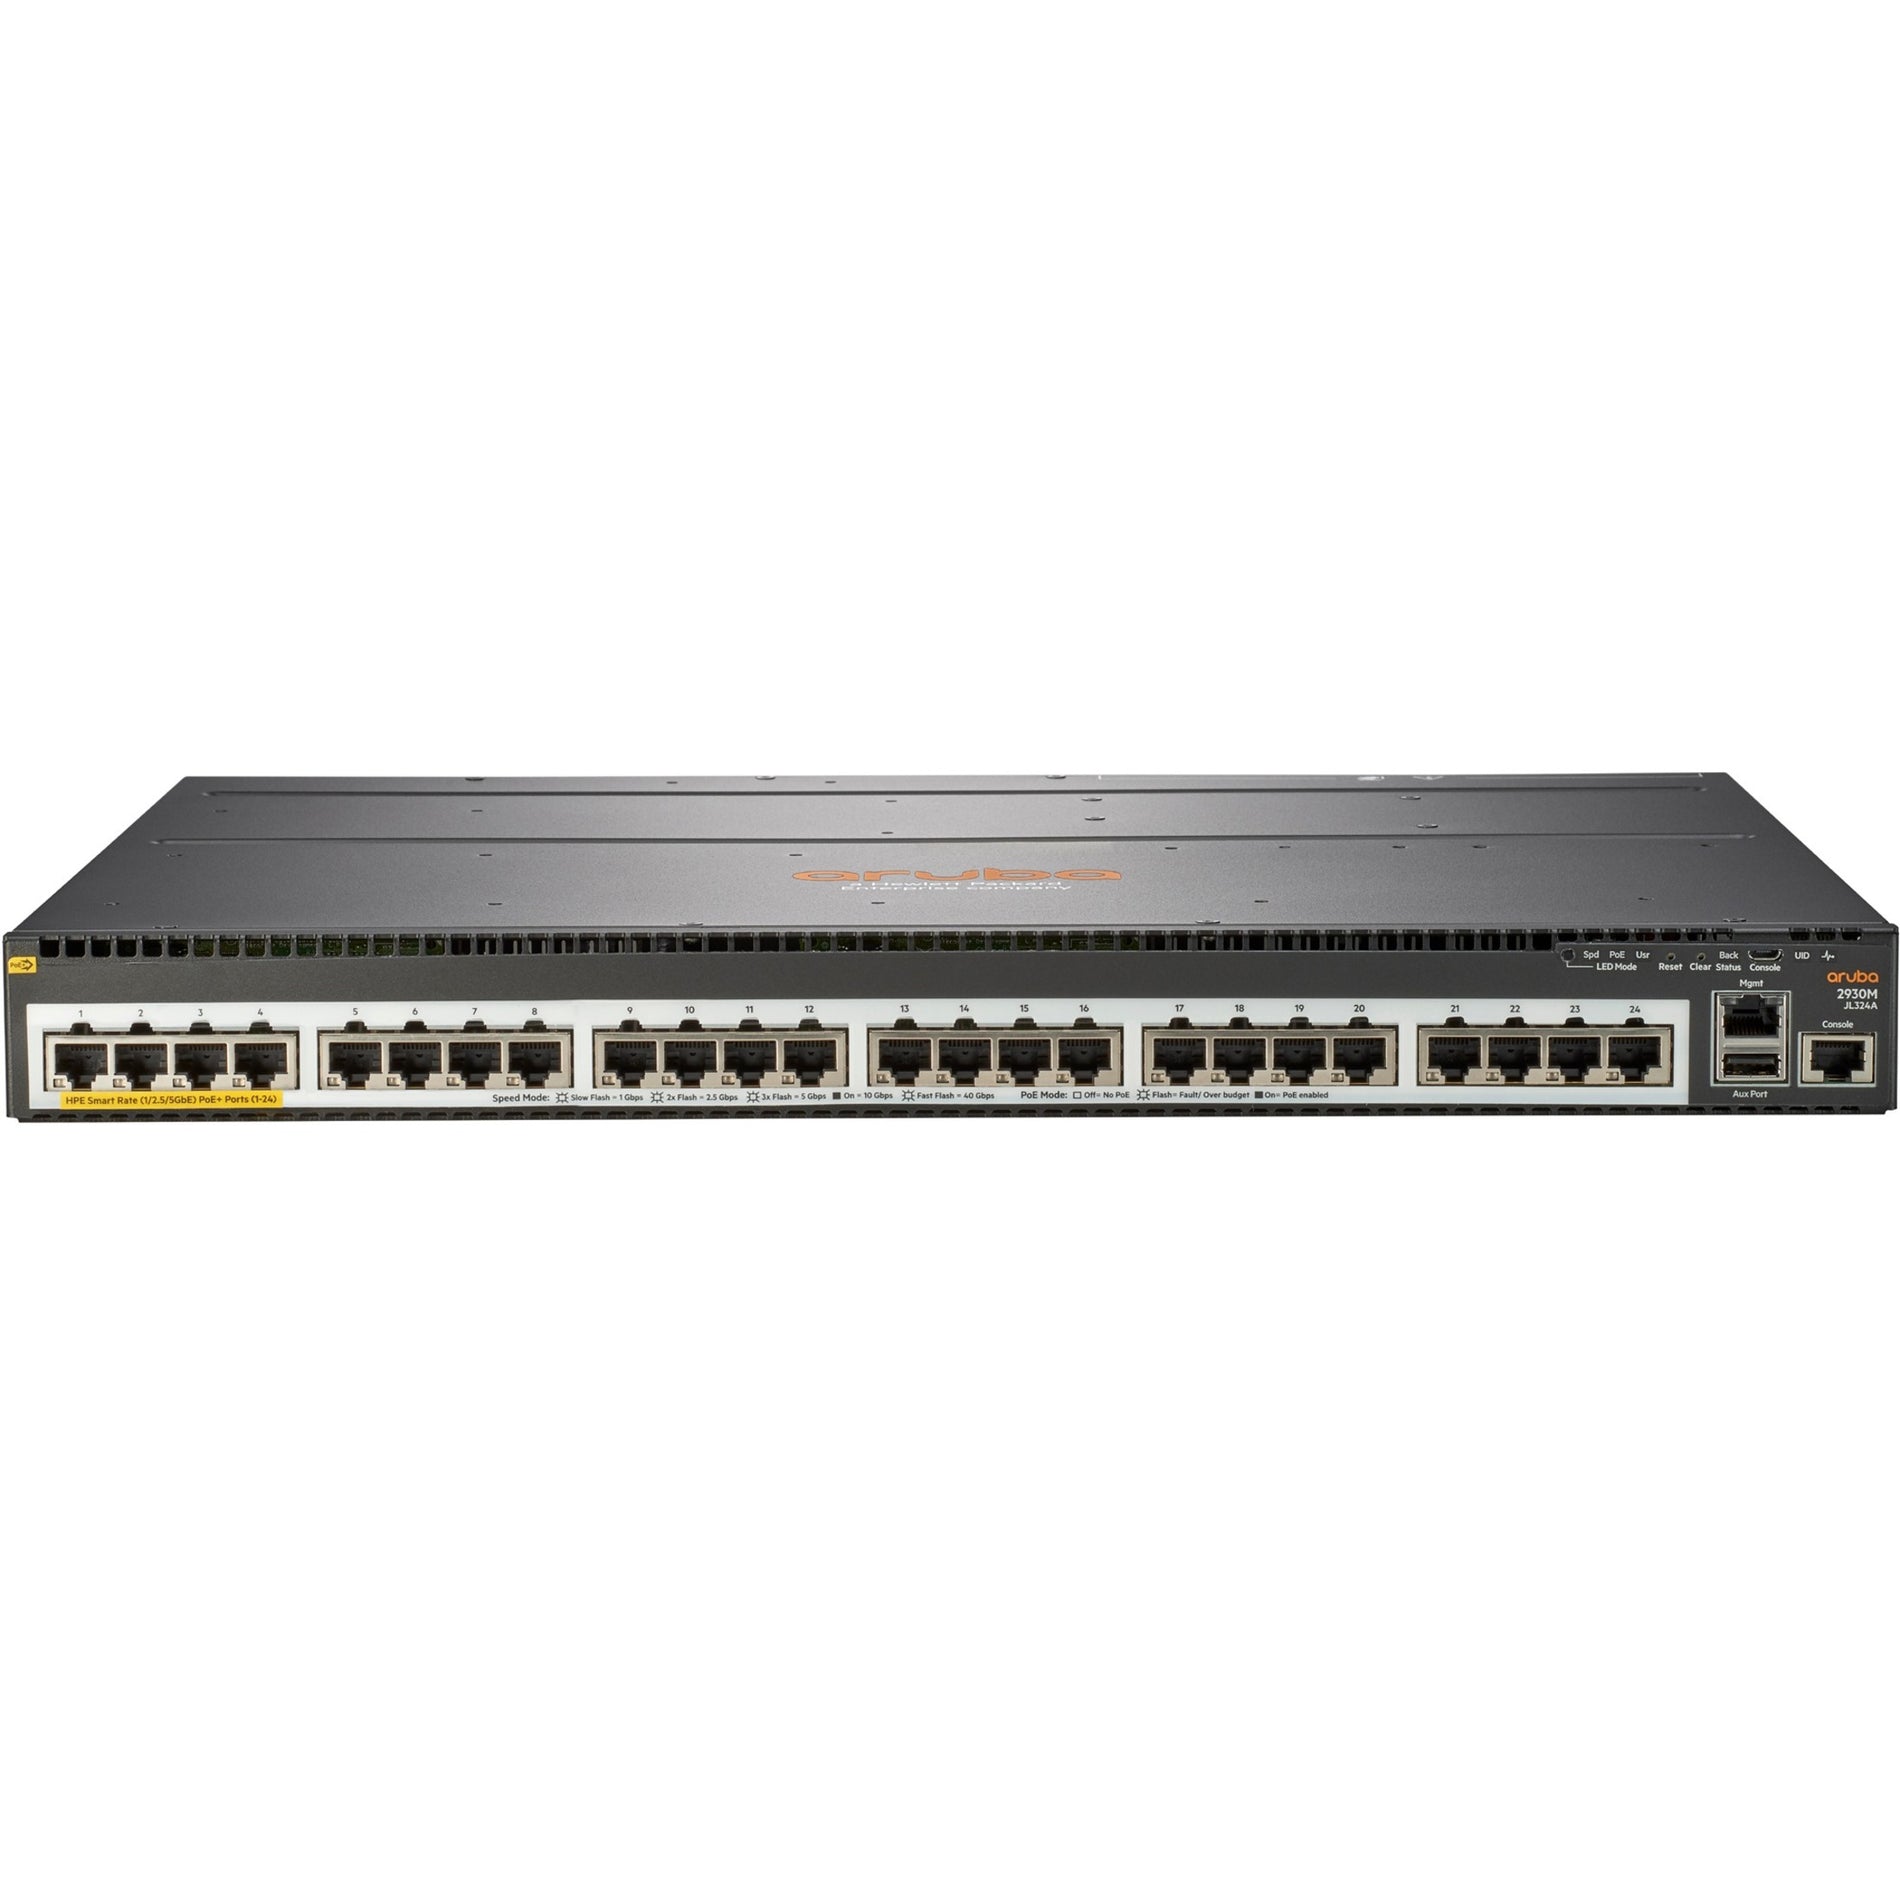 Aruba JL324A 2930M 24 HPE Smart Rate PoE+ 1-slot Switch, 24 x 5 Gigabit Ethernet Network, Stackable, Uplink Port Supported